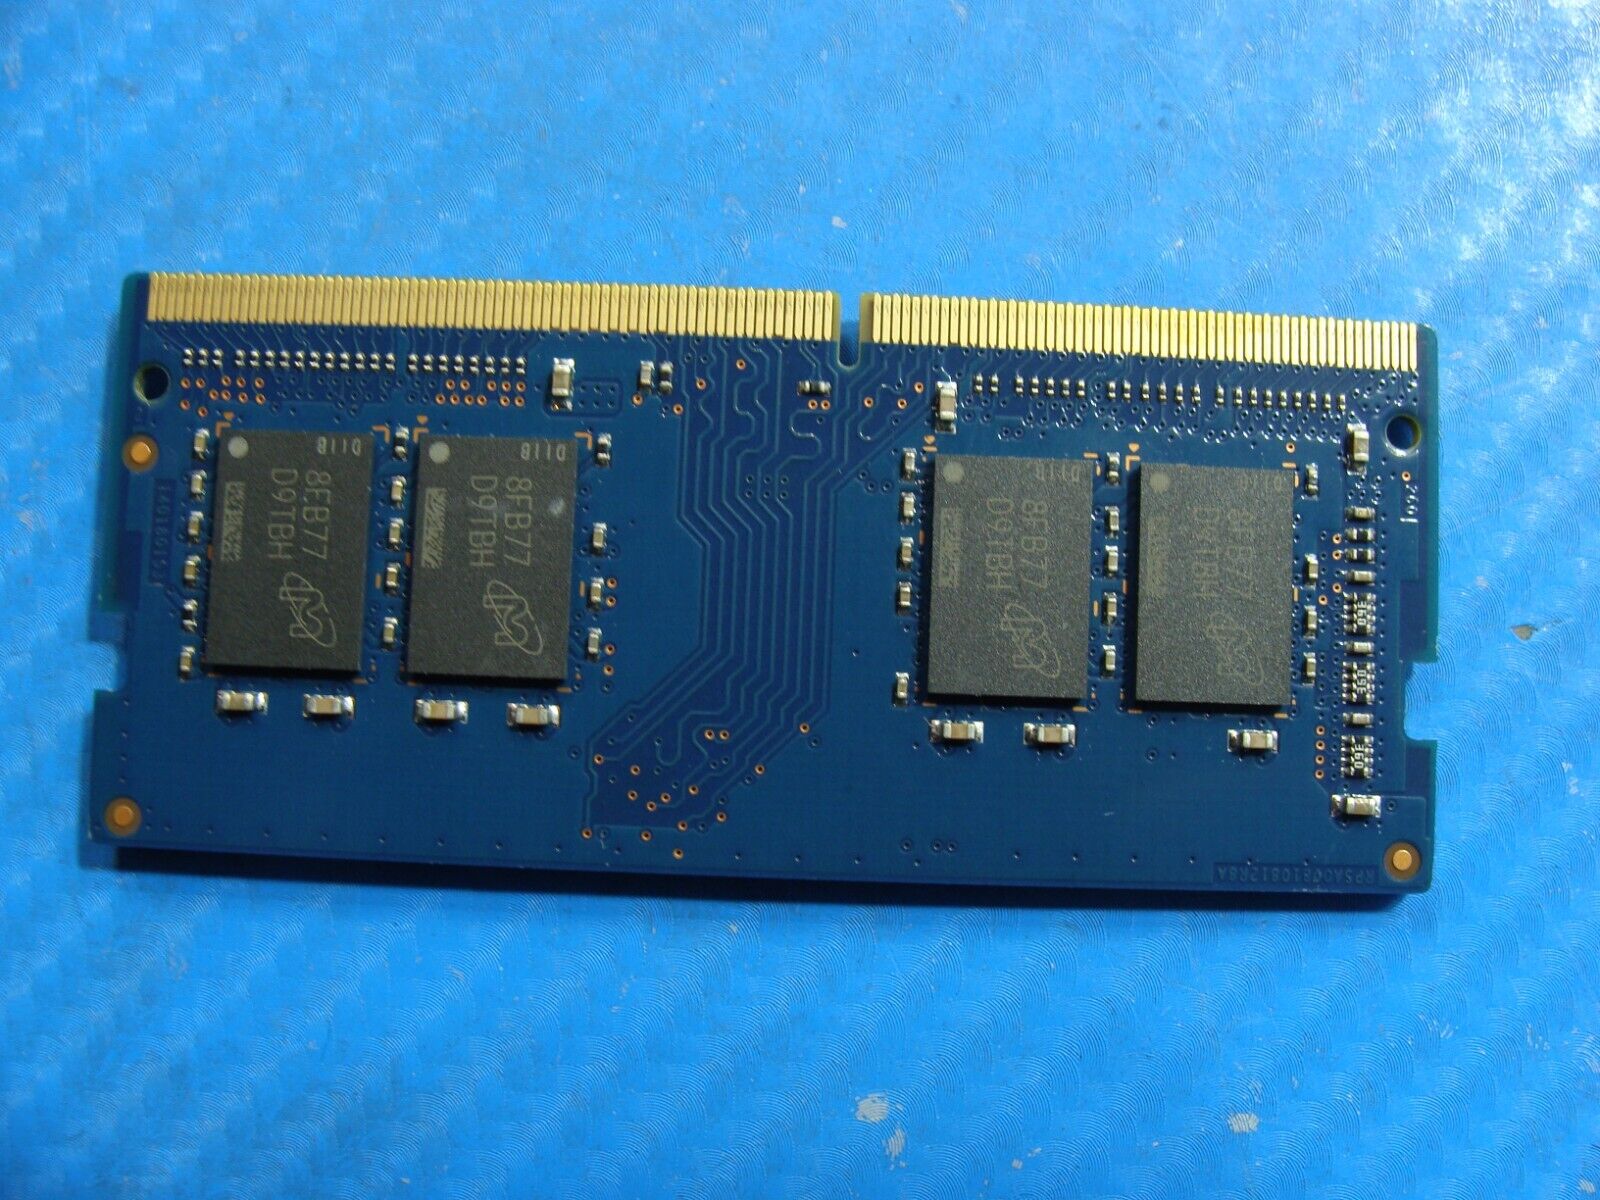 Lenovo X270 Ramaxel 8GB 1Rx8 PC4-2400T Memory RAM SO-DIMM RMSA3260MB78HAF-2400